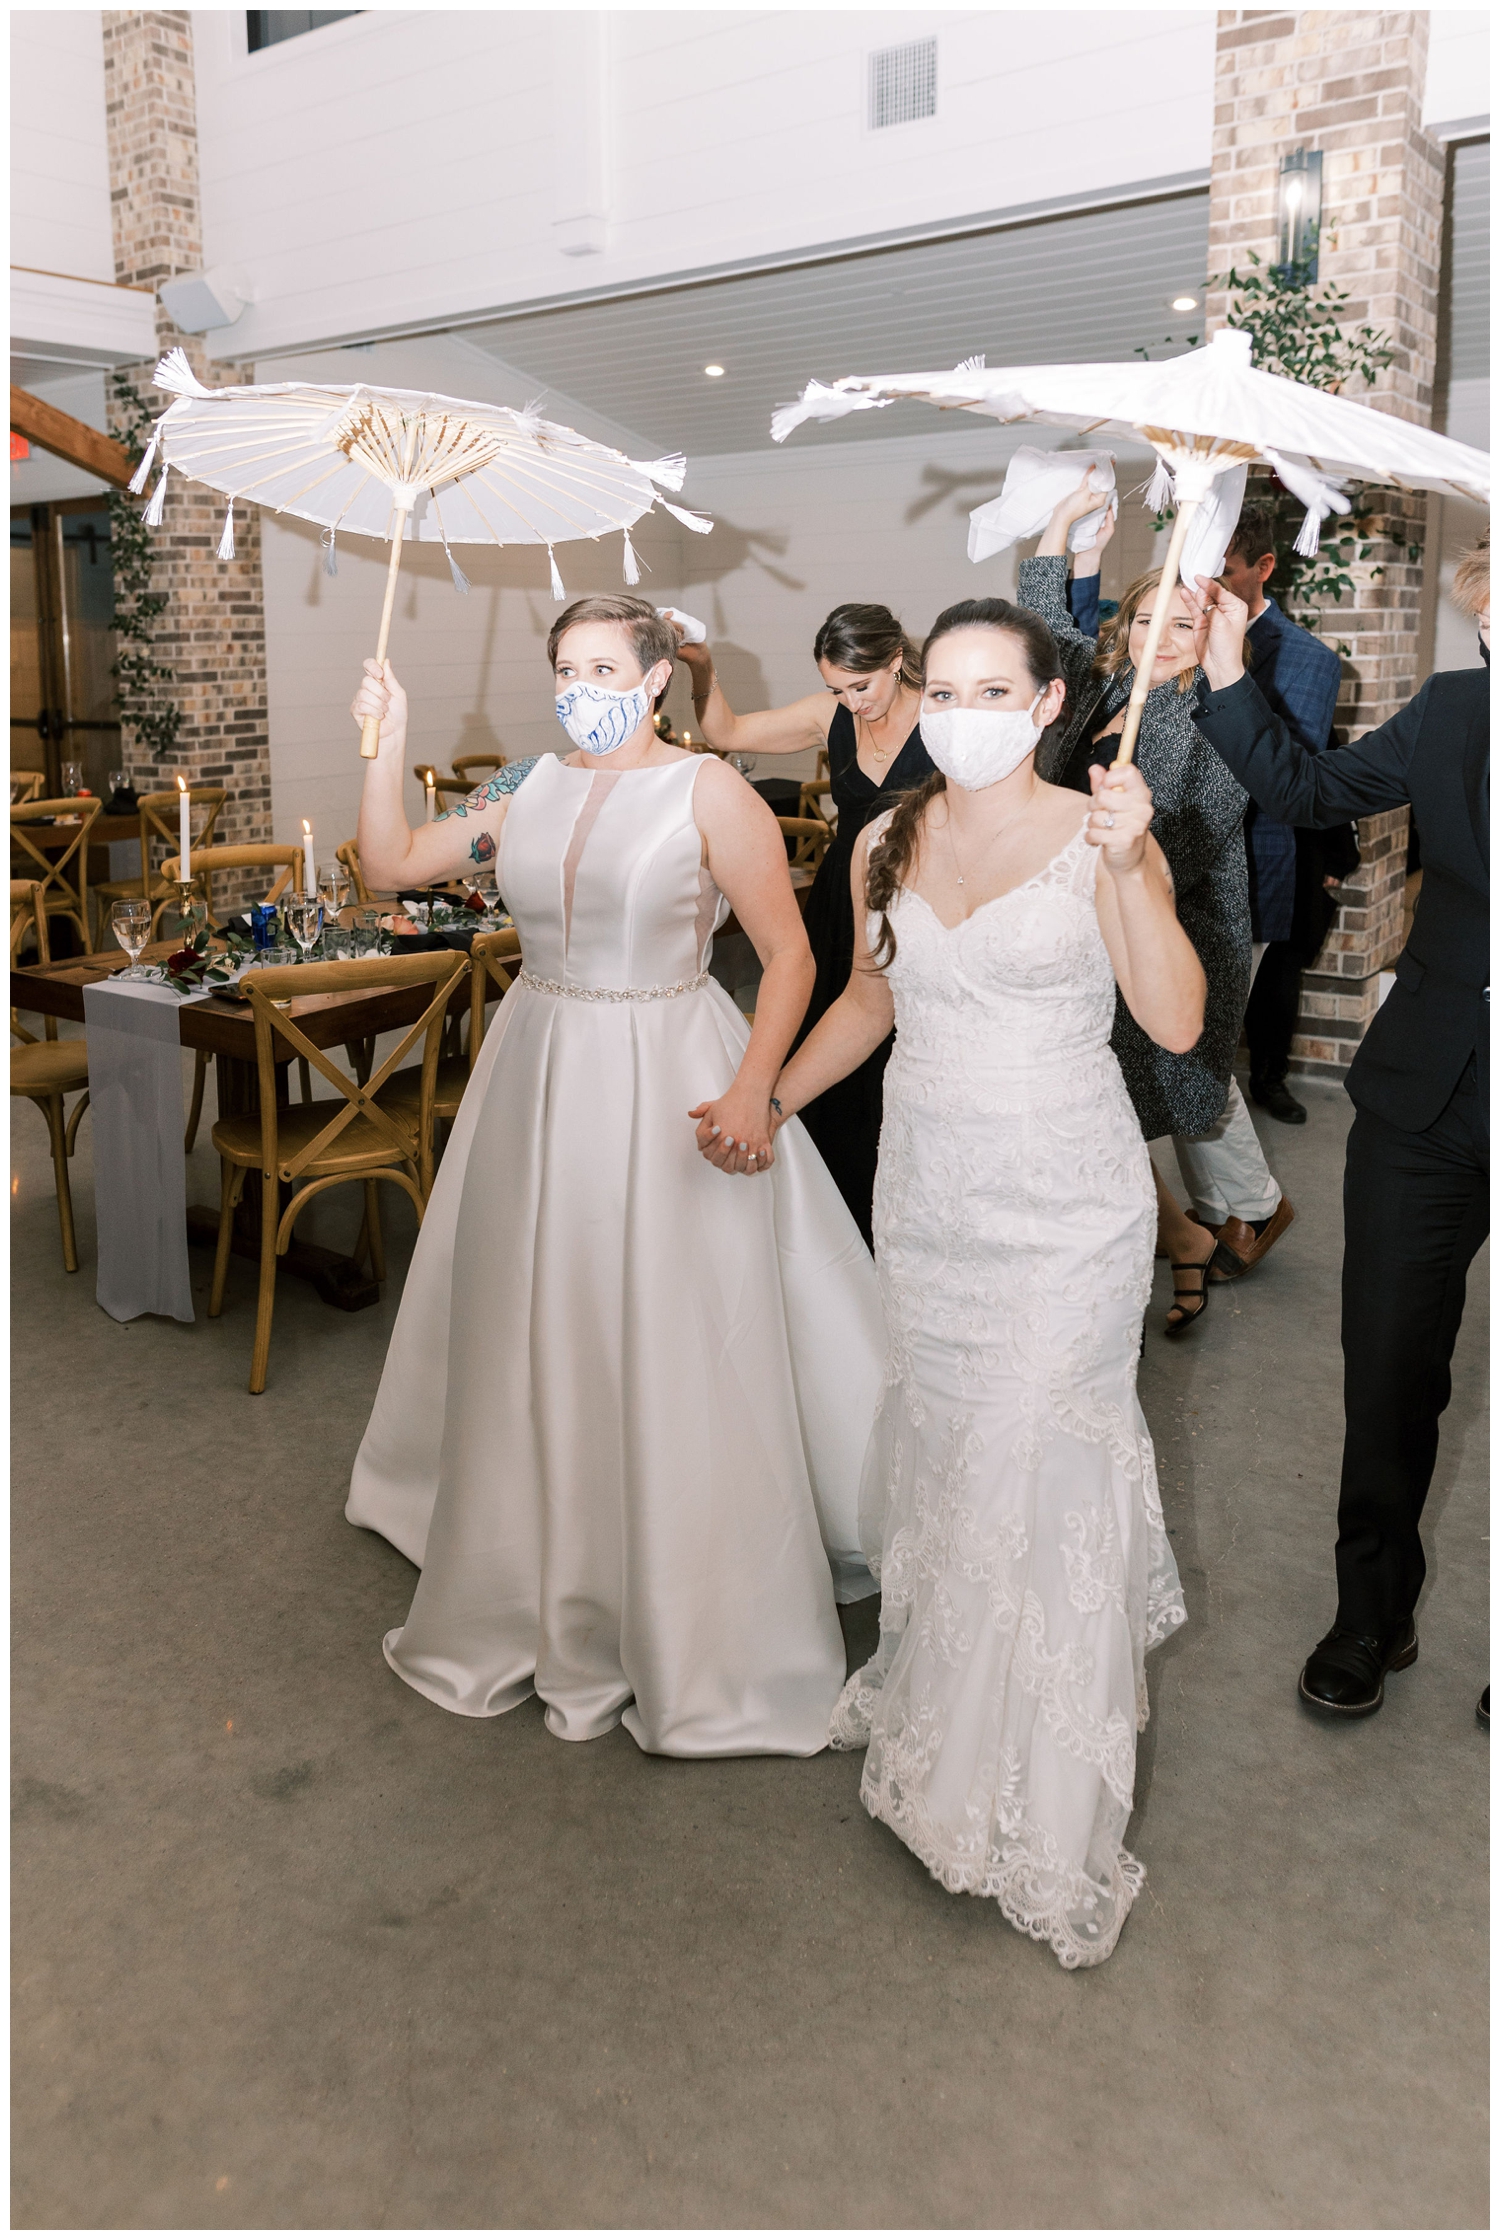 brides holding parasols at wedding reception